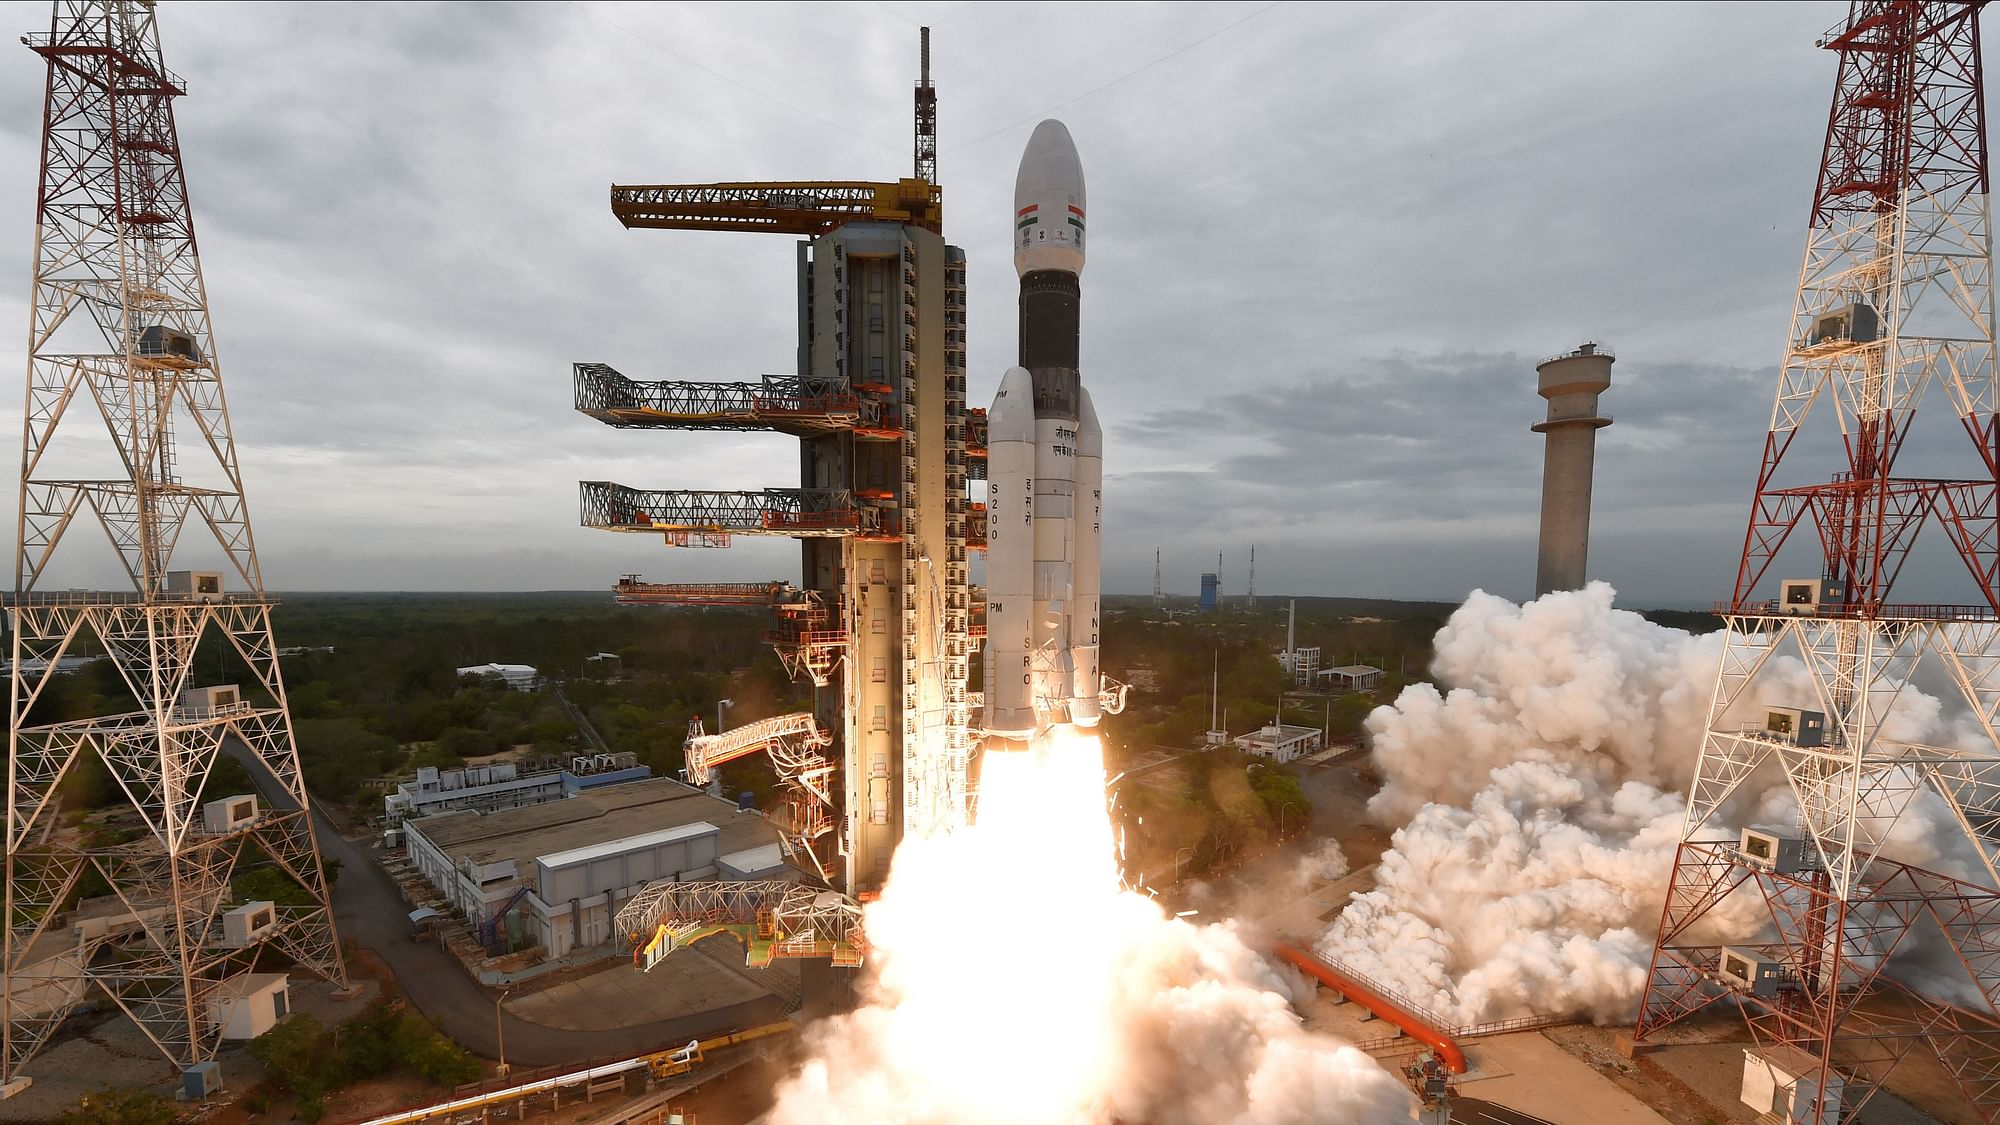 Chandrayaan II launched on 22 July, Monday from Sriharikota.